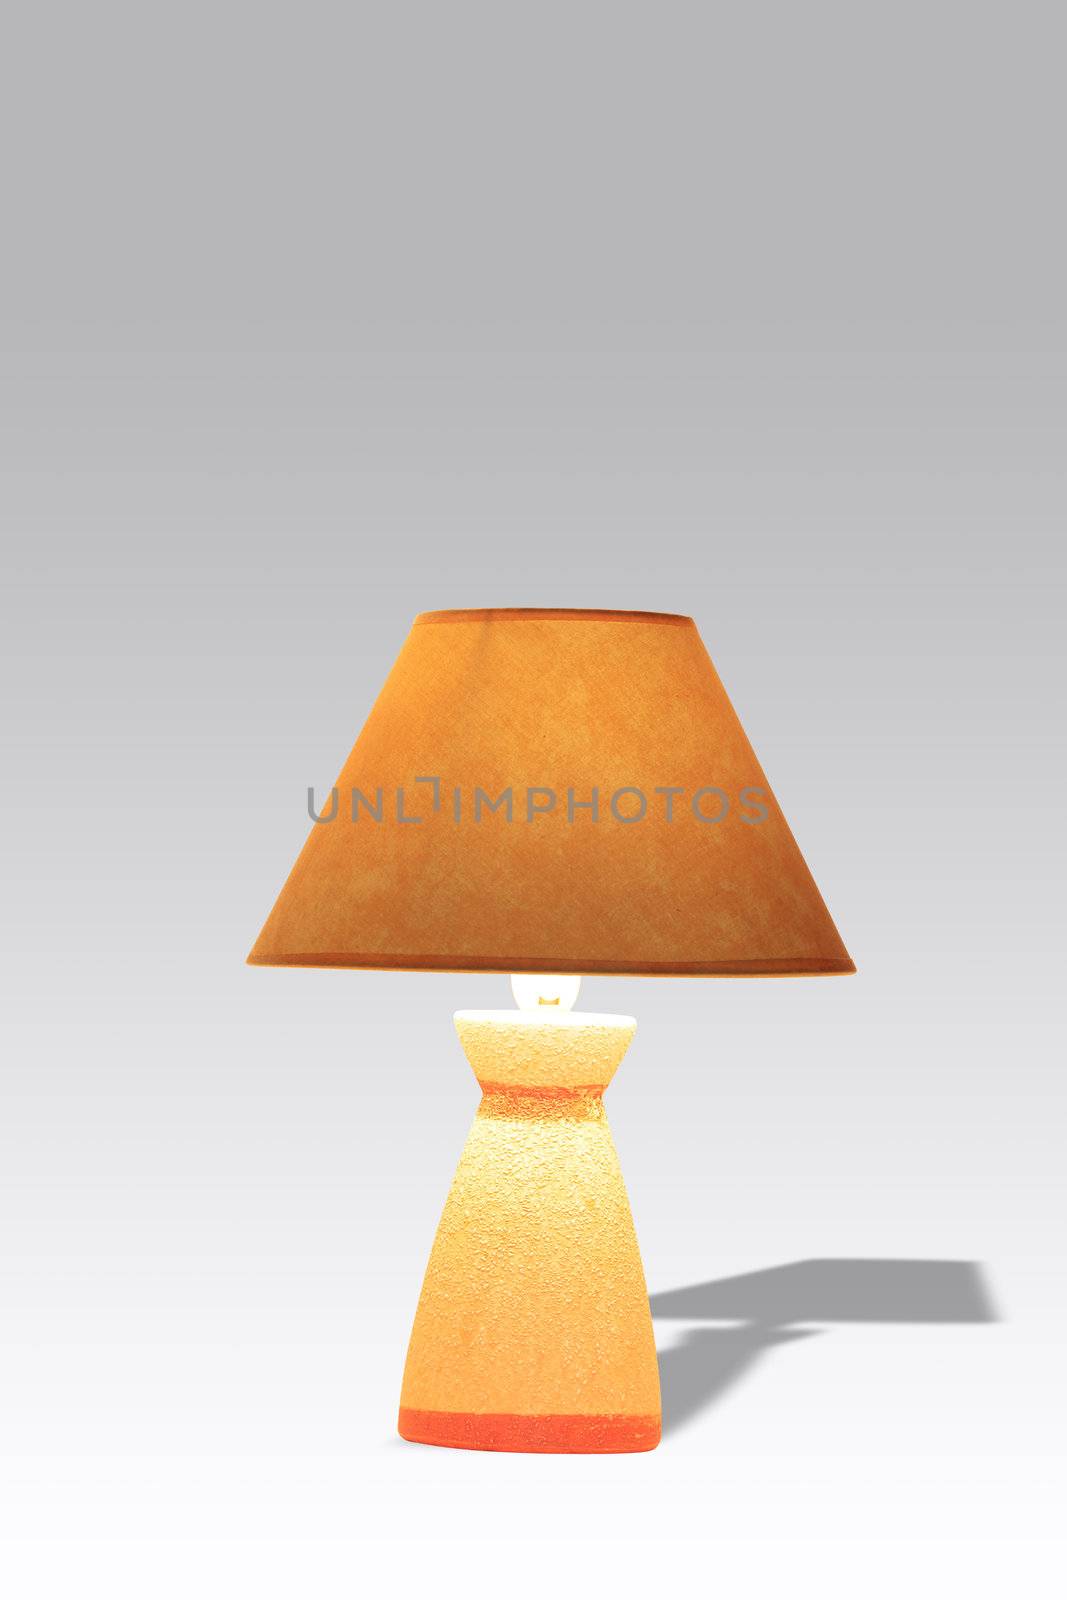 Table Lamp by kvkirillov